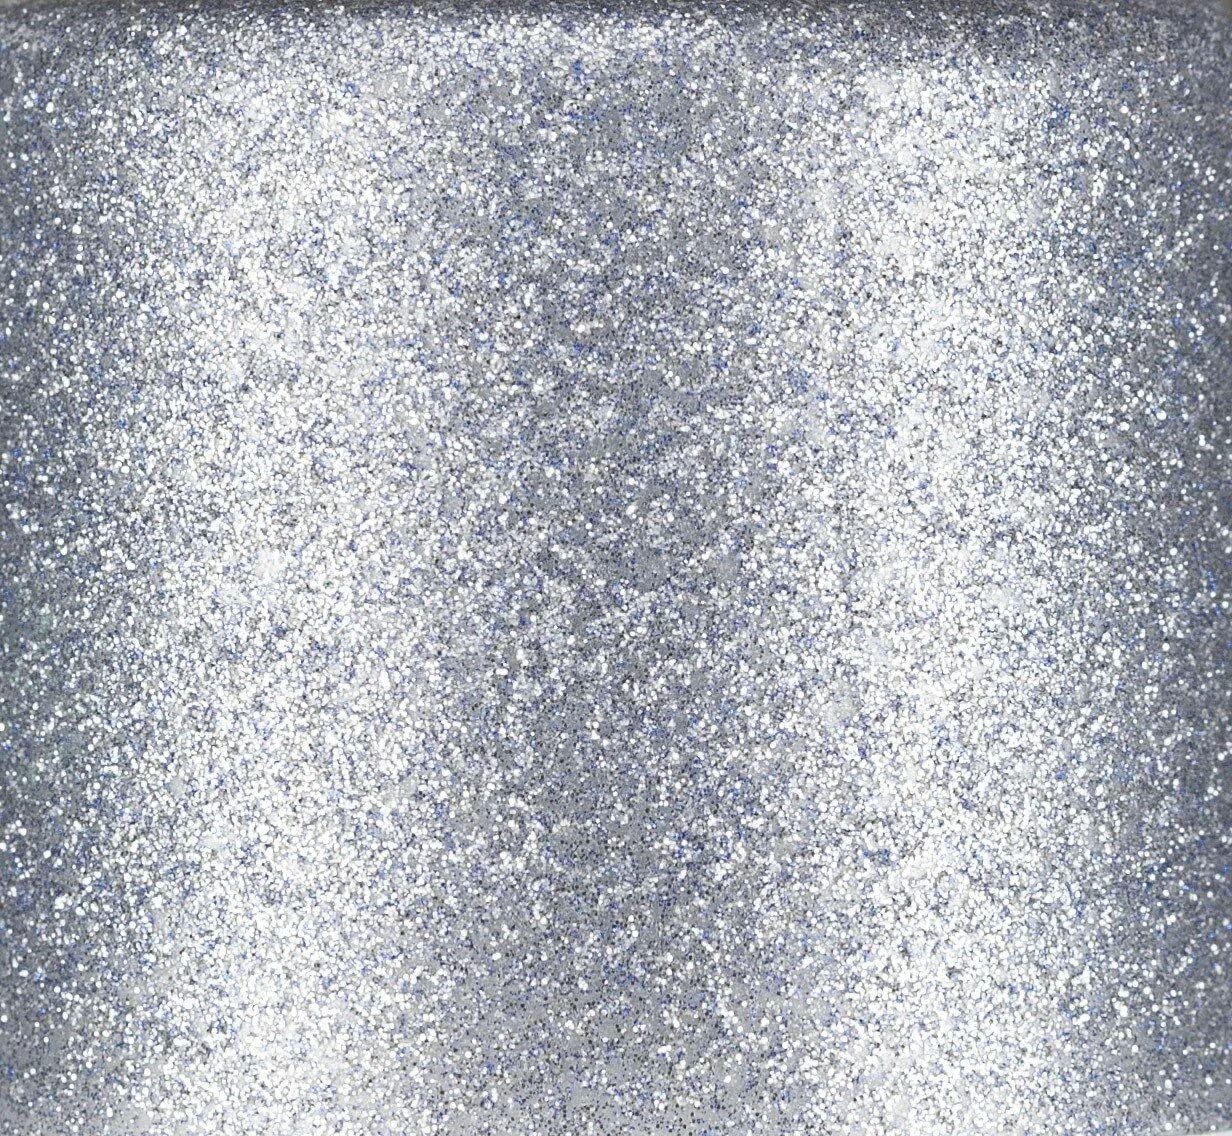 Сильвер глиттер. Хром серебро 89, металл / shiny Silver 89. Сильвер серый металлик. Снежок (мелкий глиттер) серебро (3401). У золота серебристый цвет